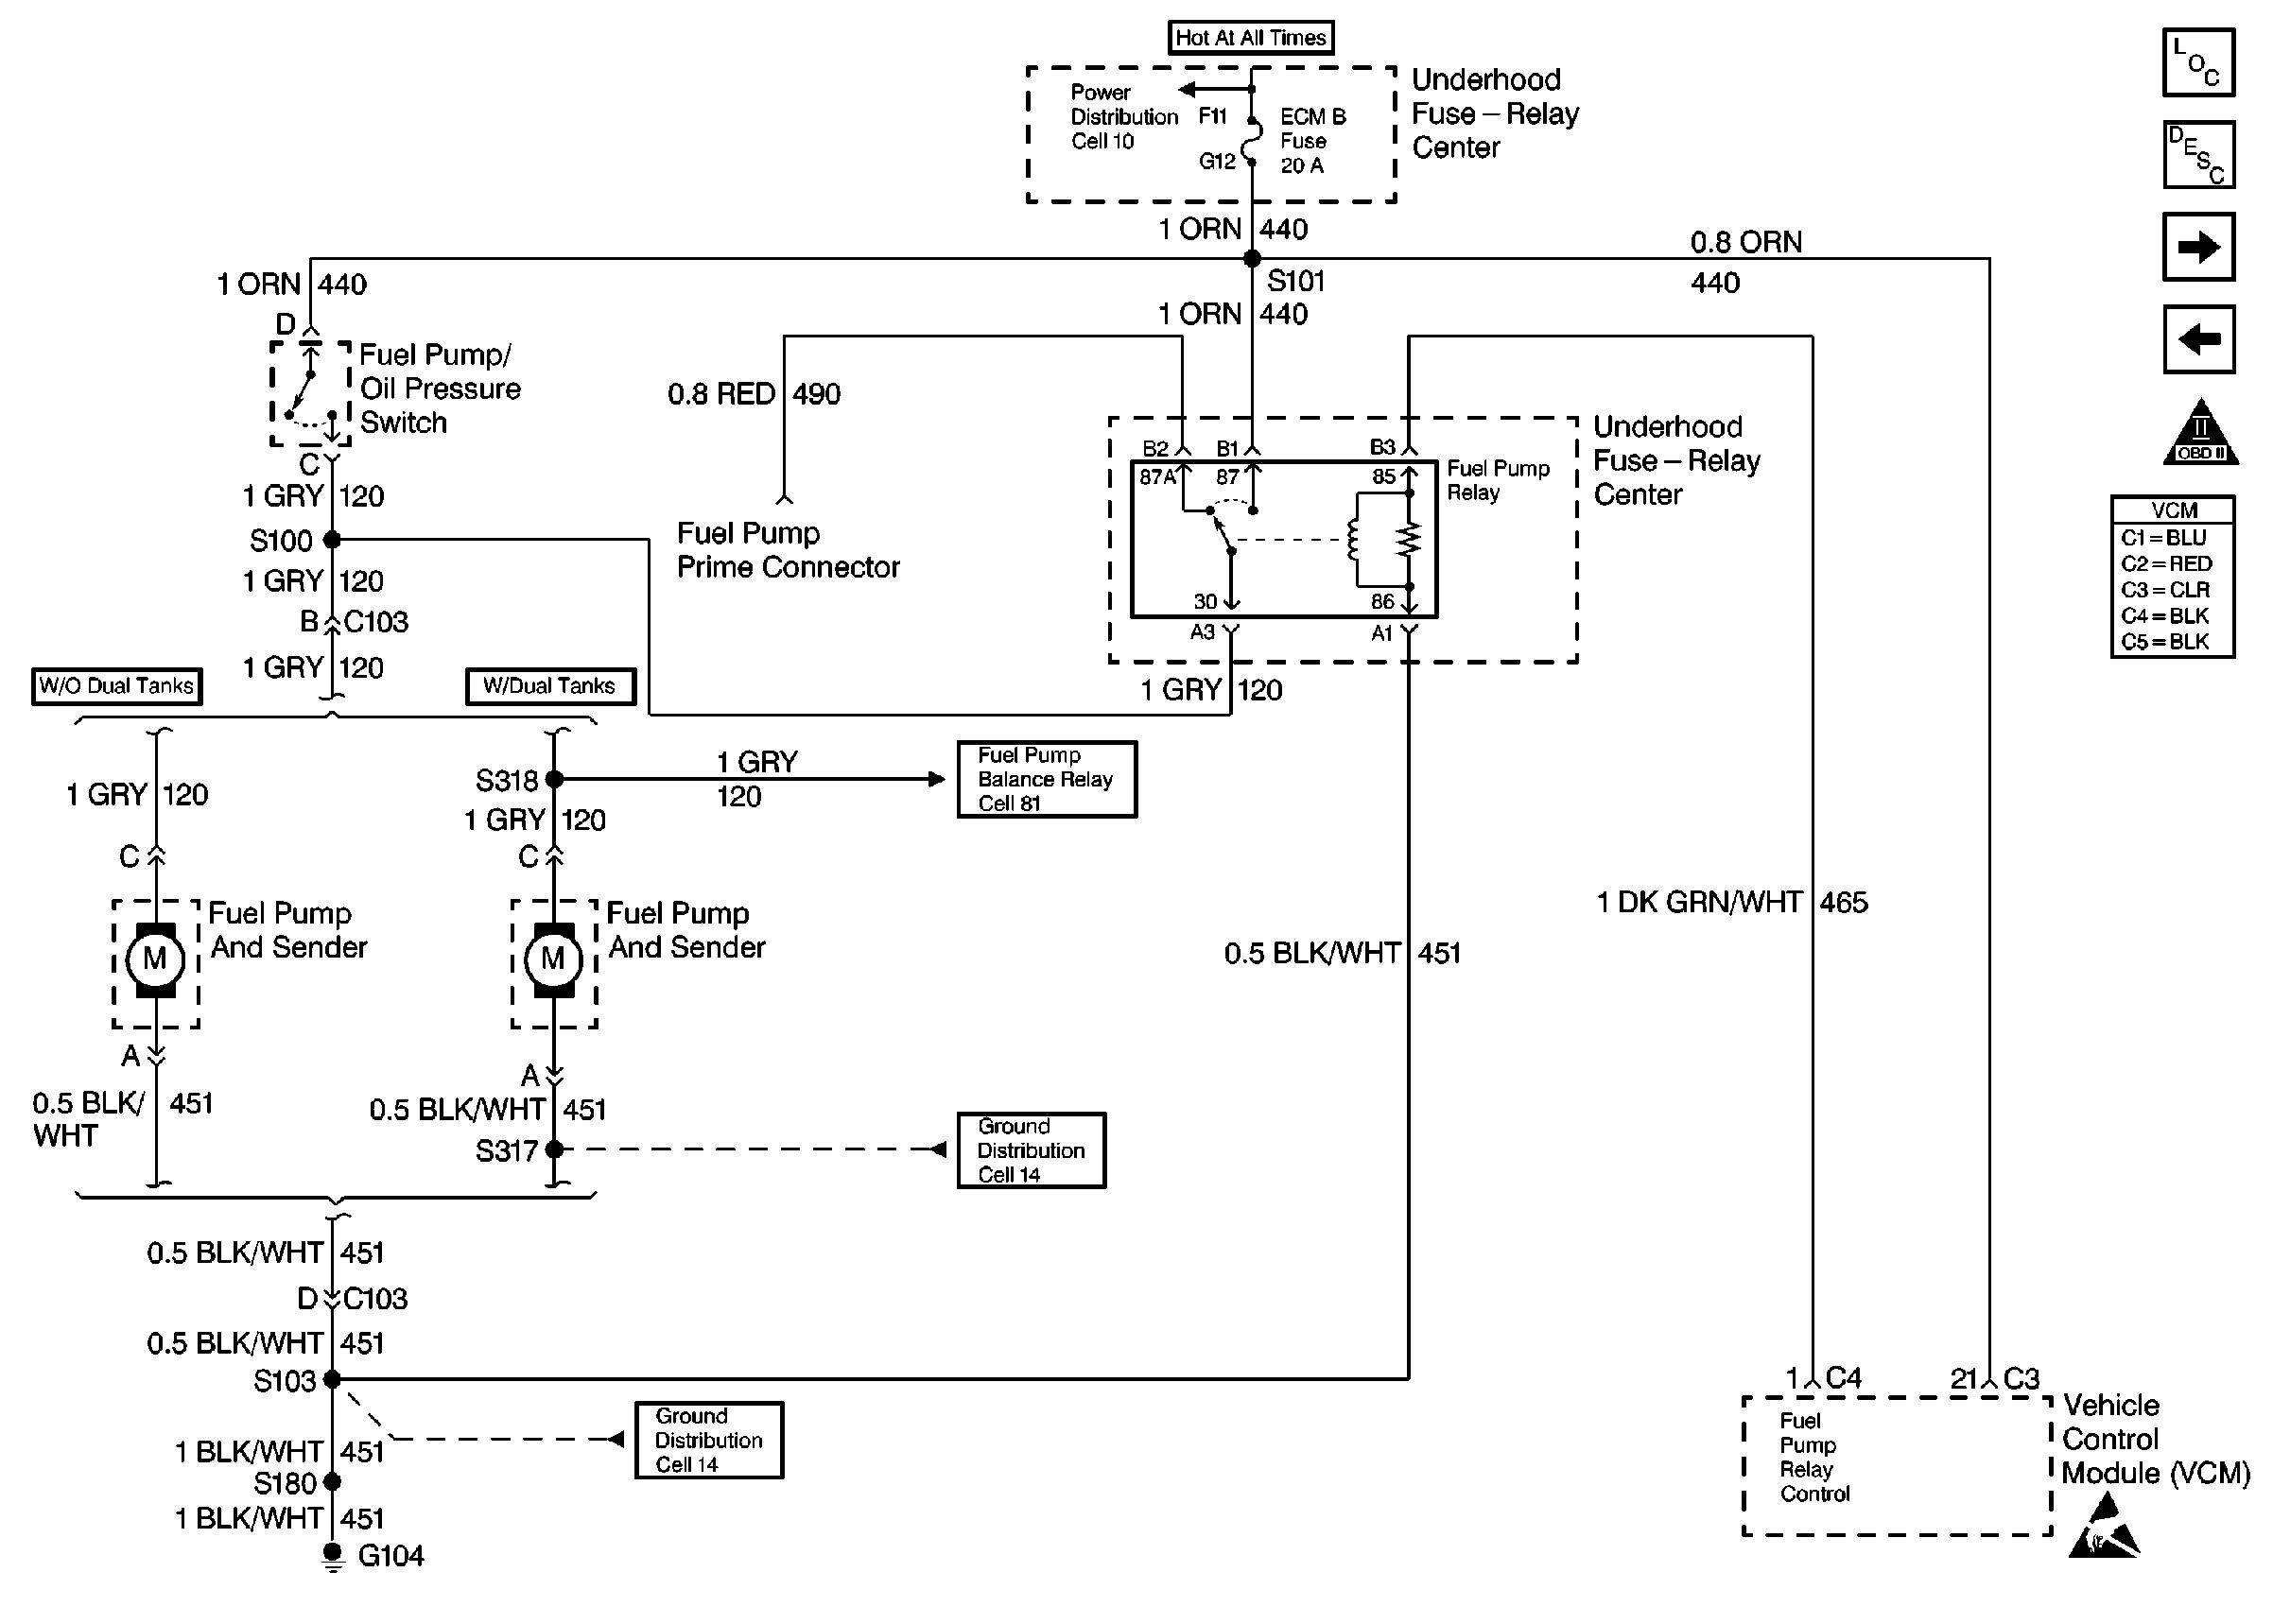 2004 Serria 6.0 Fuel Pump Wiring Diagram] 99 Chevy Suburban Fuel System Wiring Diagram Full Of 2004 Serria 6.0 Fuel Pump Wiring